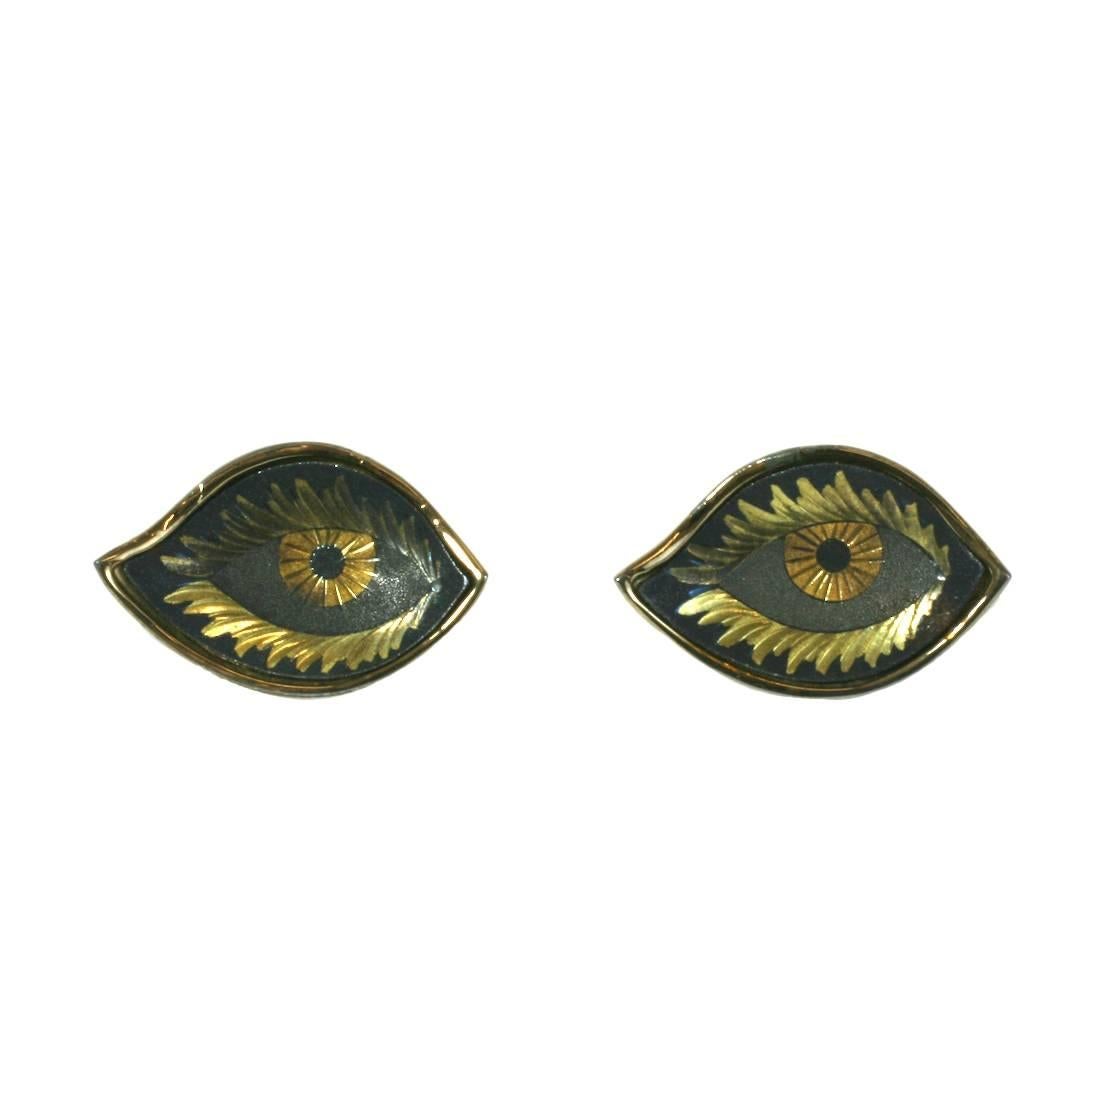 Surreal "Eye" Cufflinks For Sale